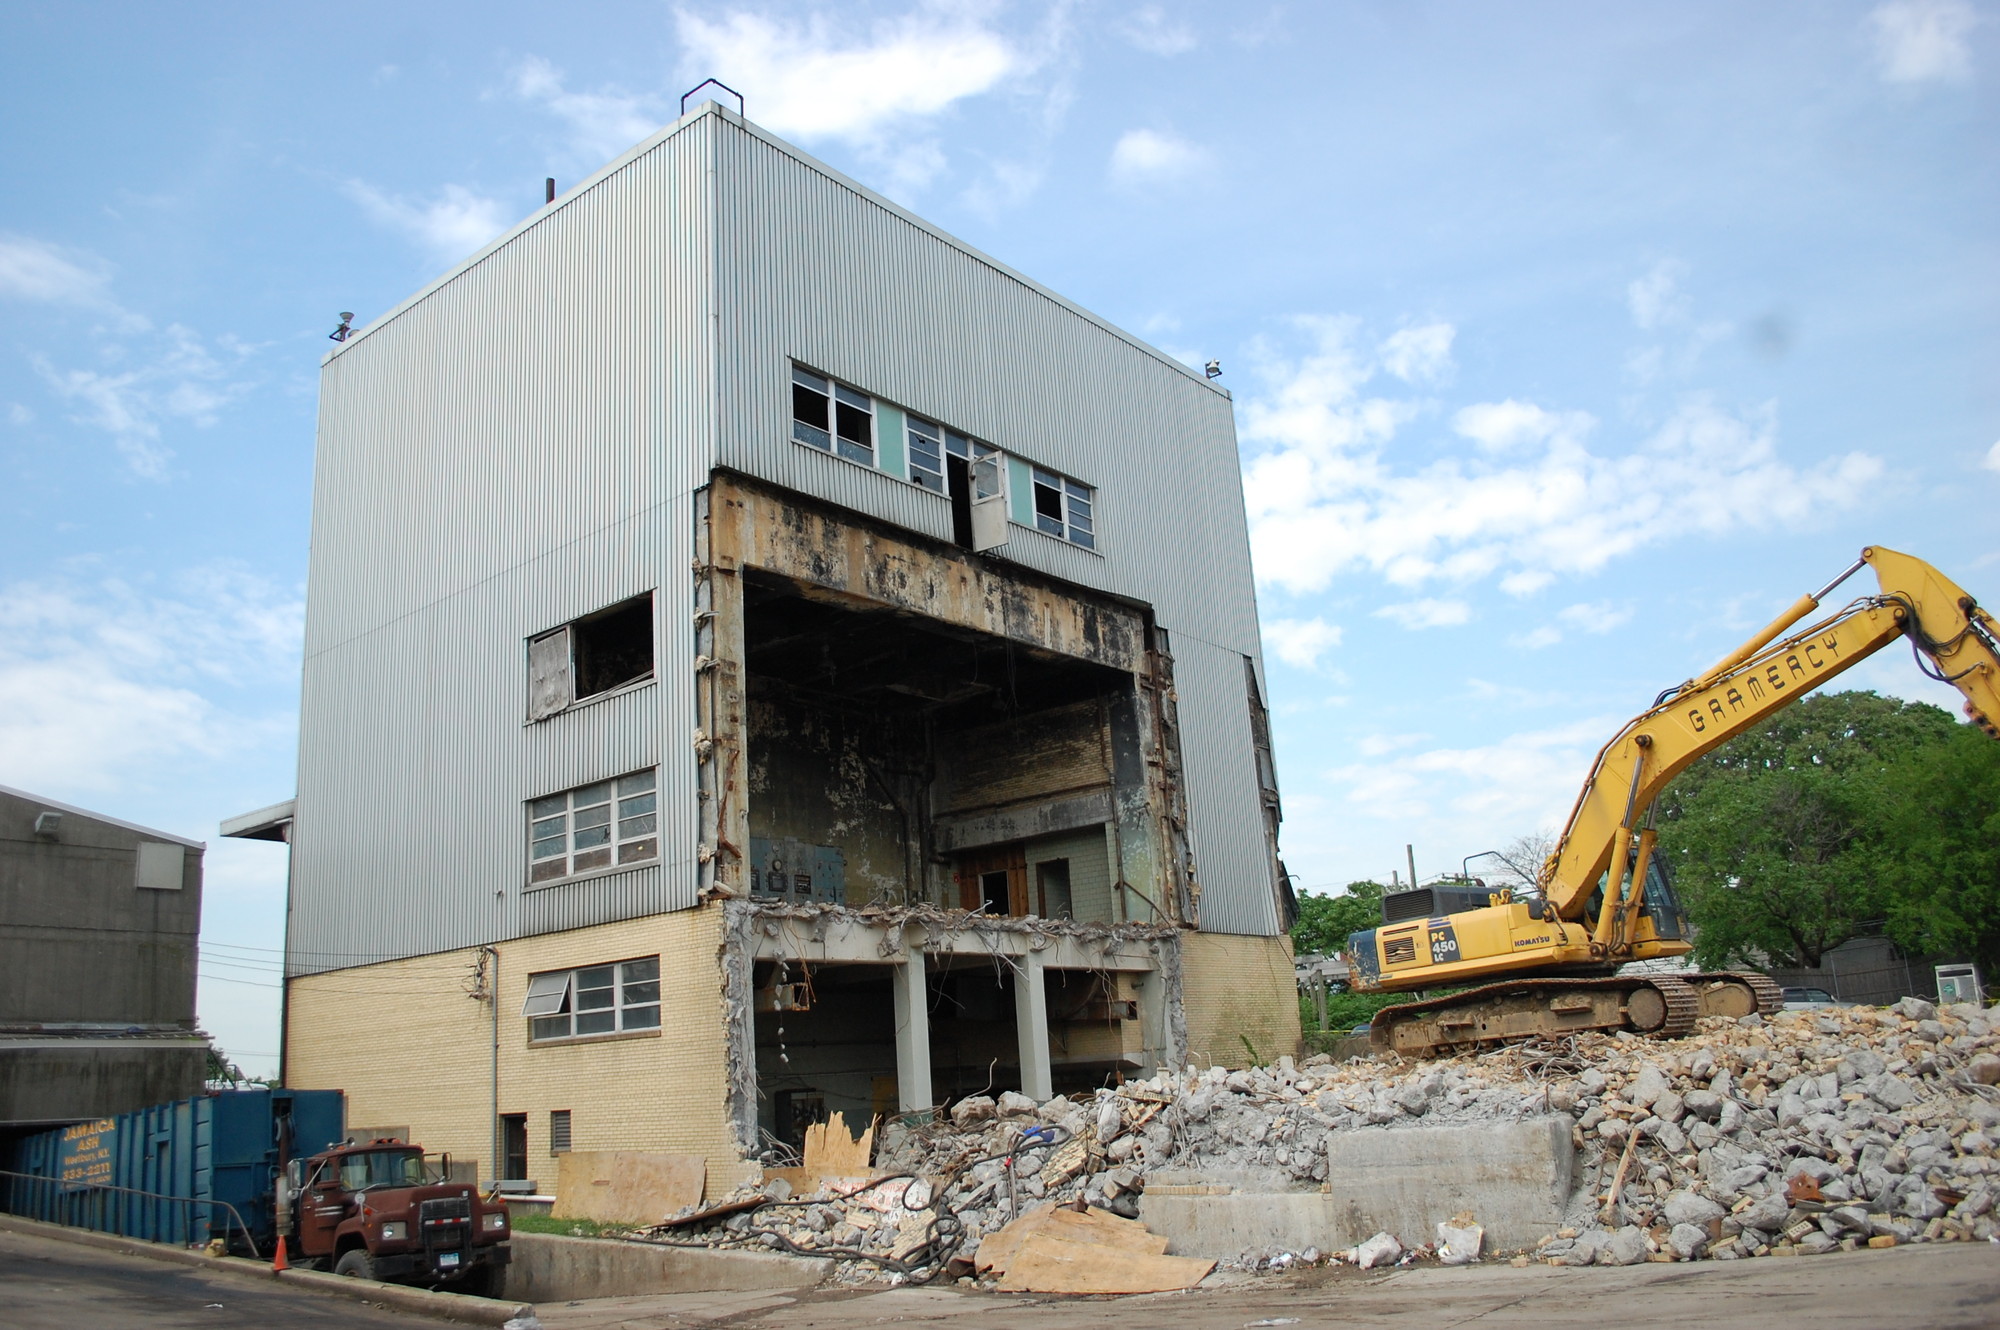 Demolition has begun on the abandoned incinerator building in Valley Stream.